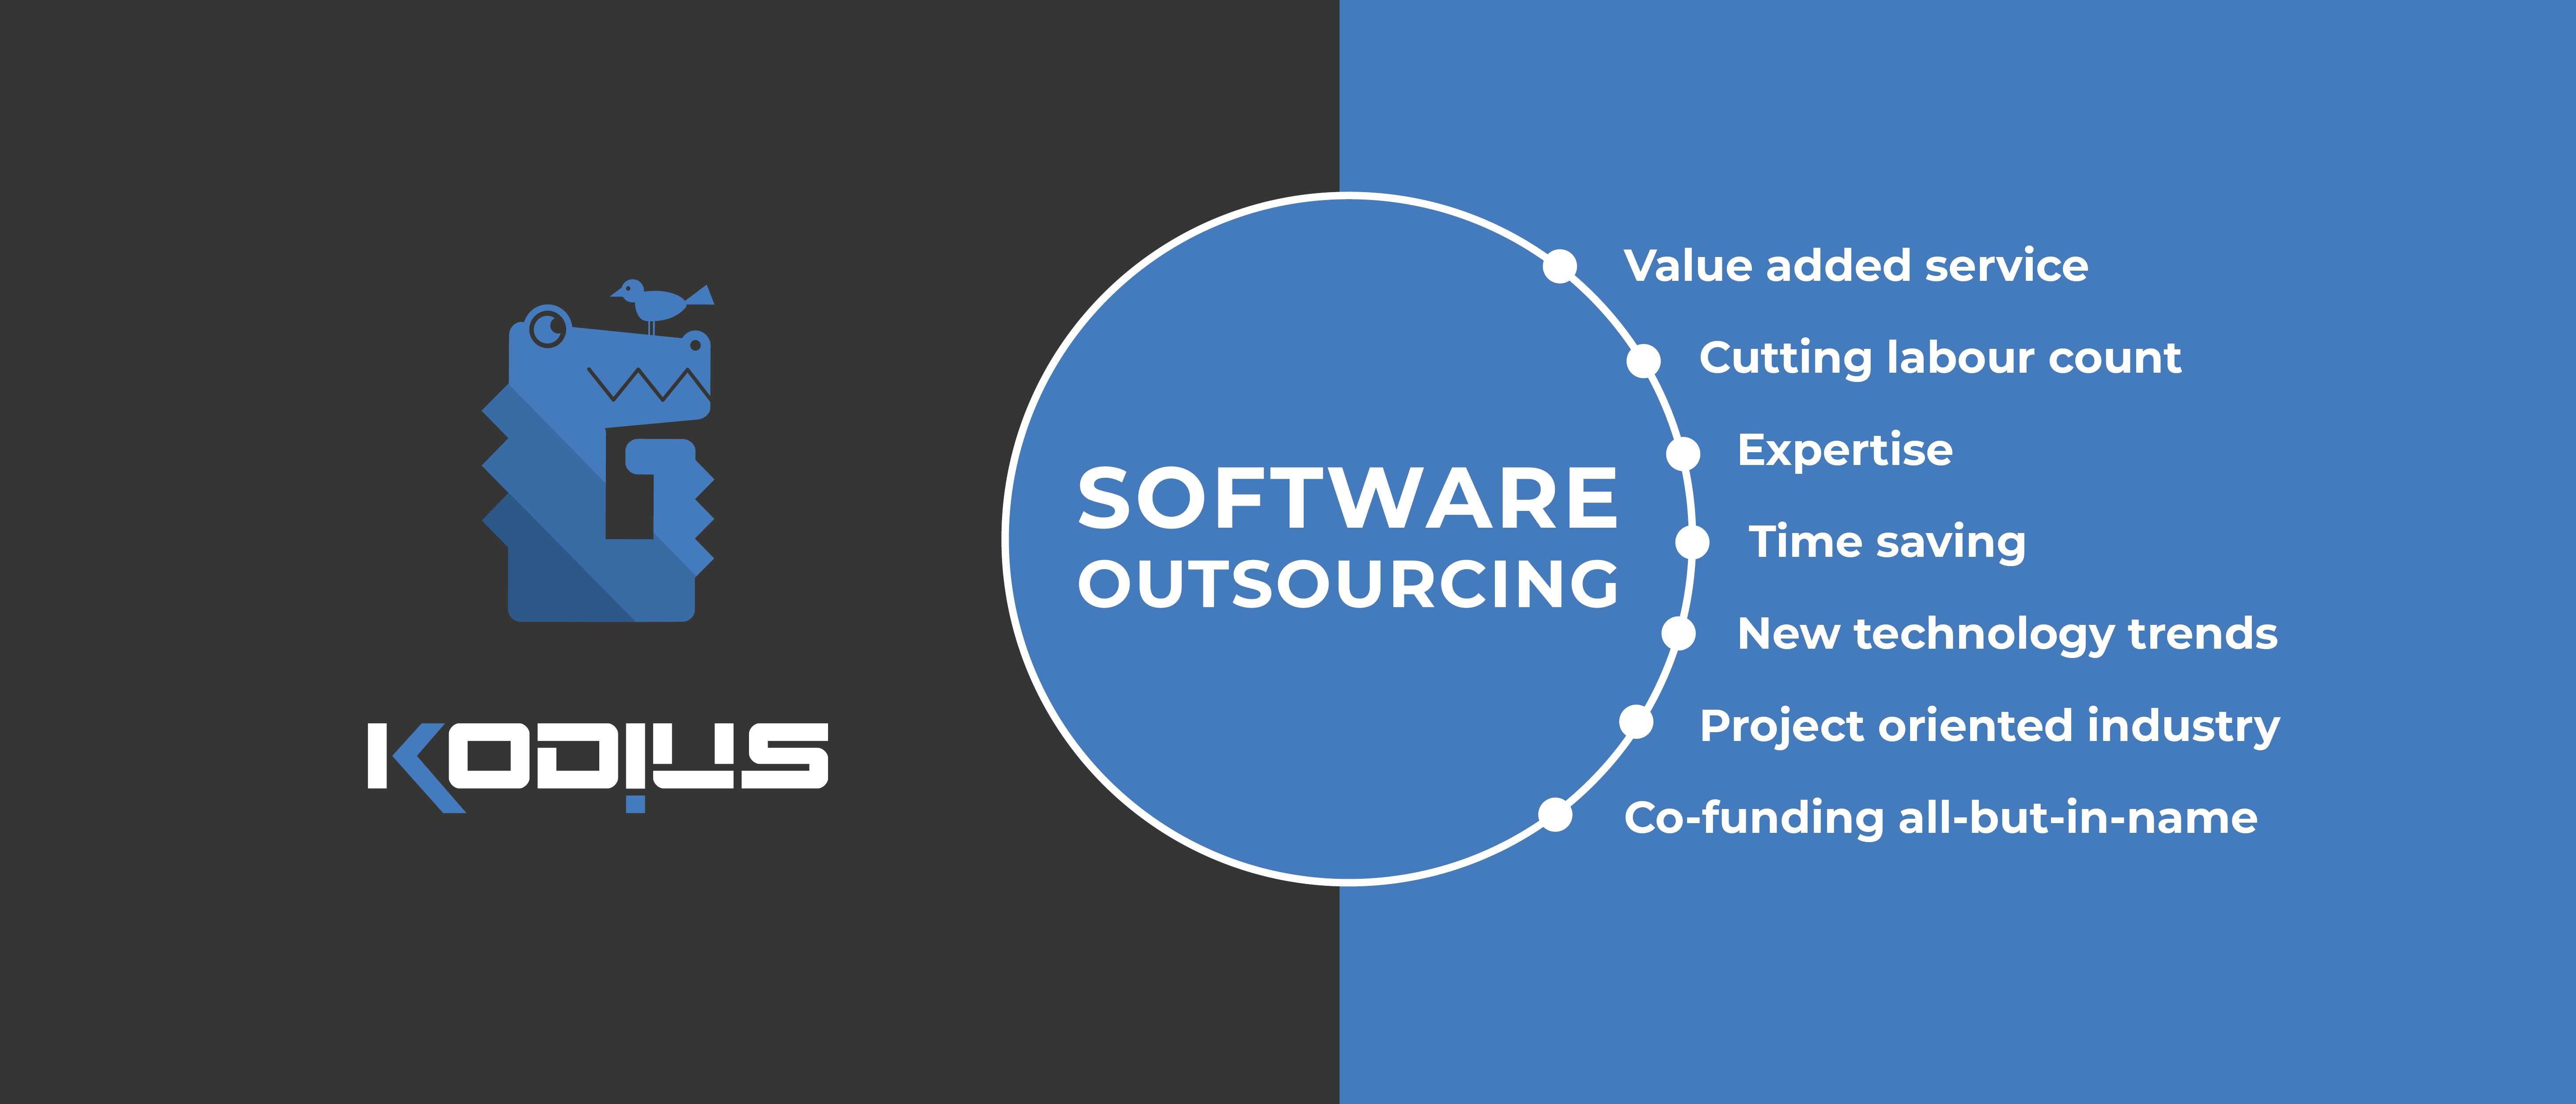 Kodius software outsourcing